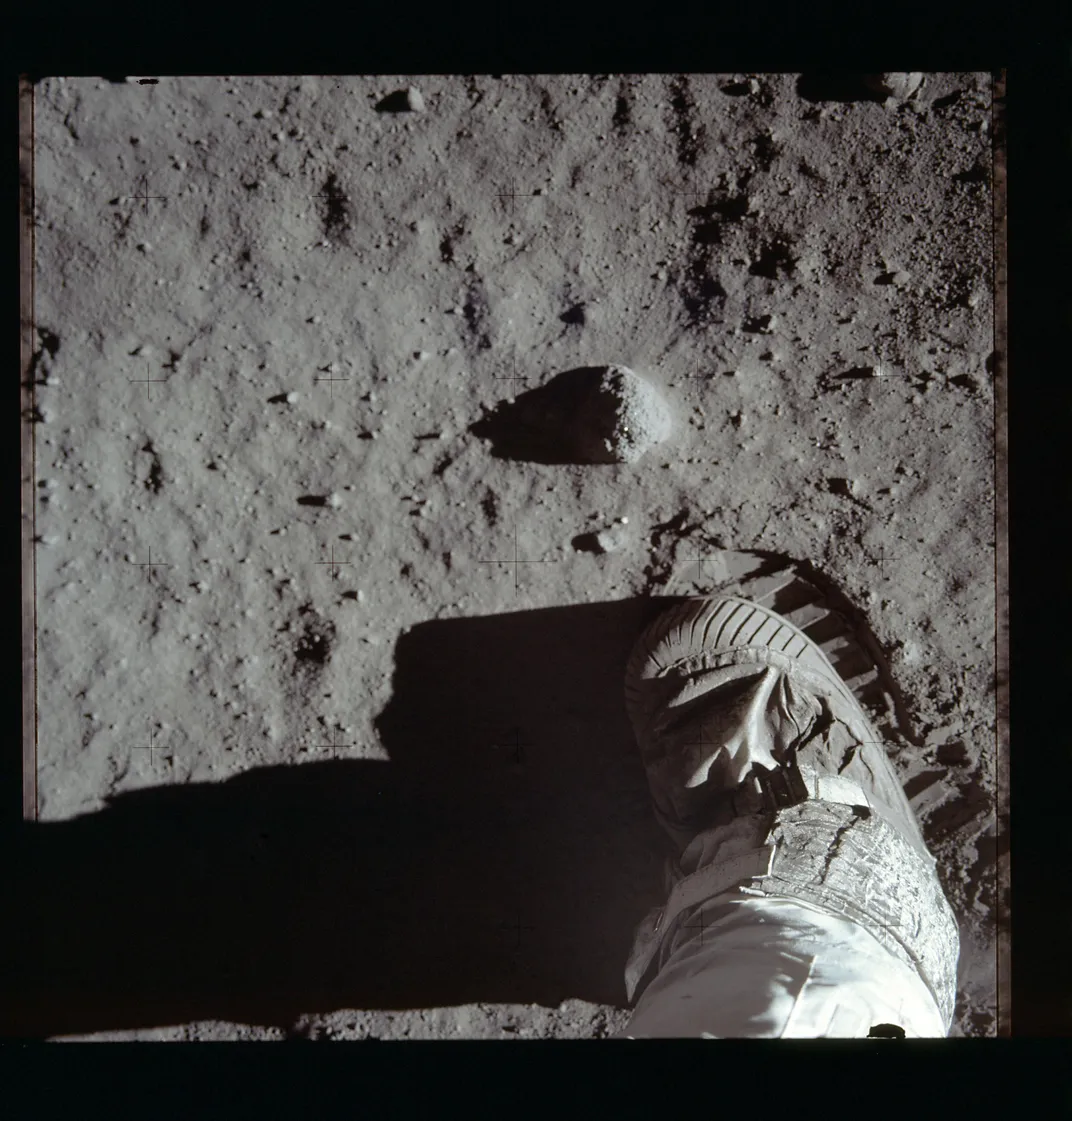 Aldrin footprint on the Moon